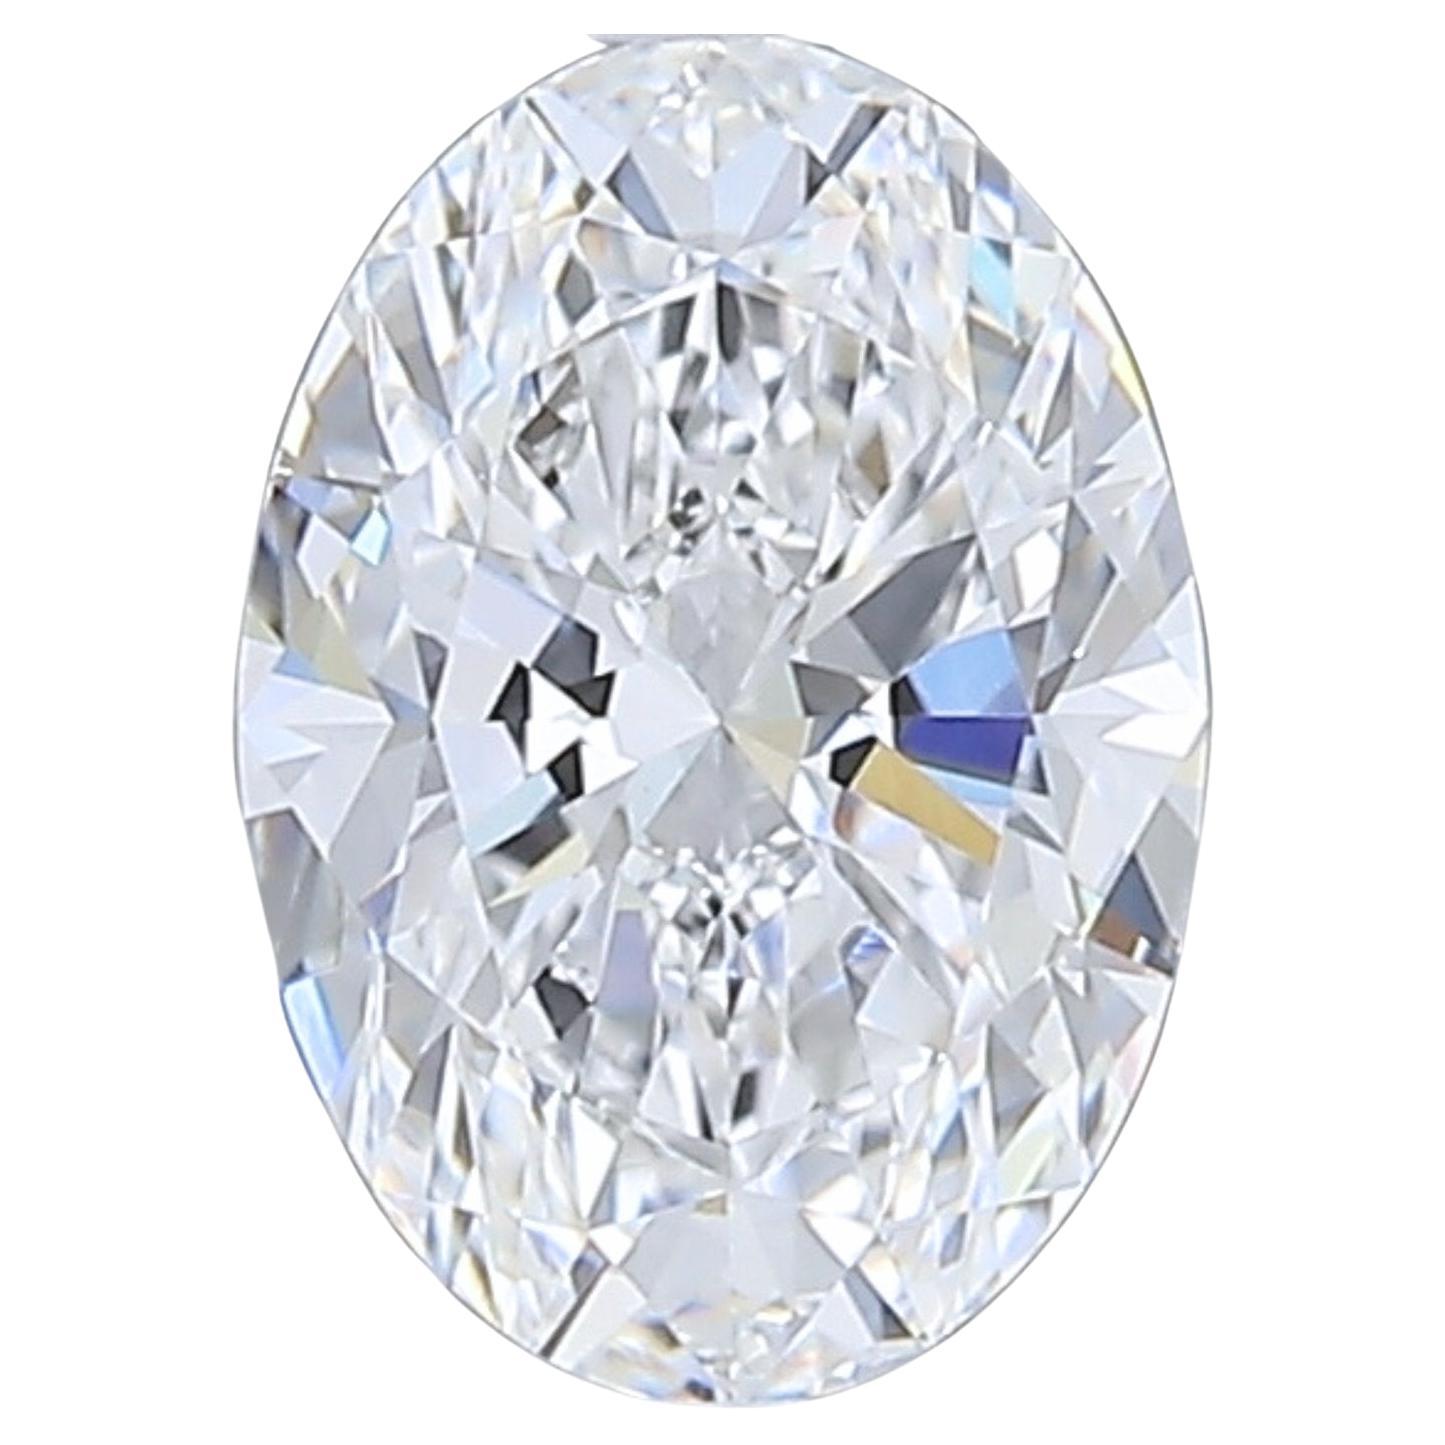 1pc Pretty Natural cut Oval diamond in a 1.02 carat For Sale